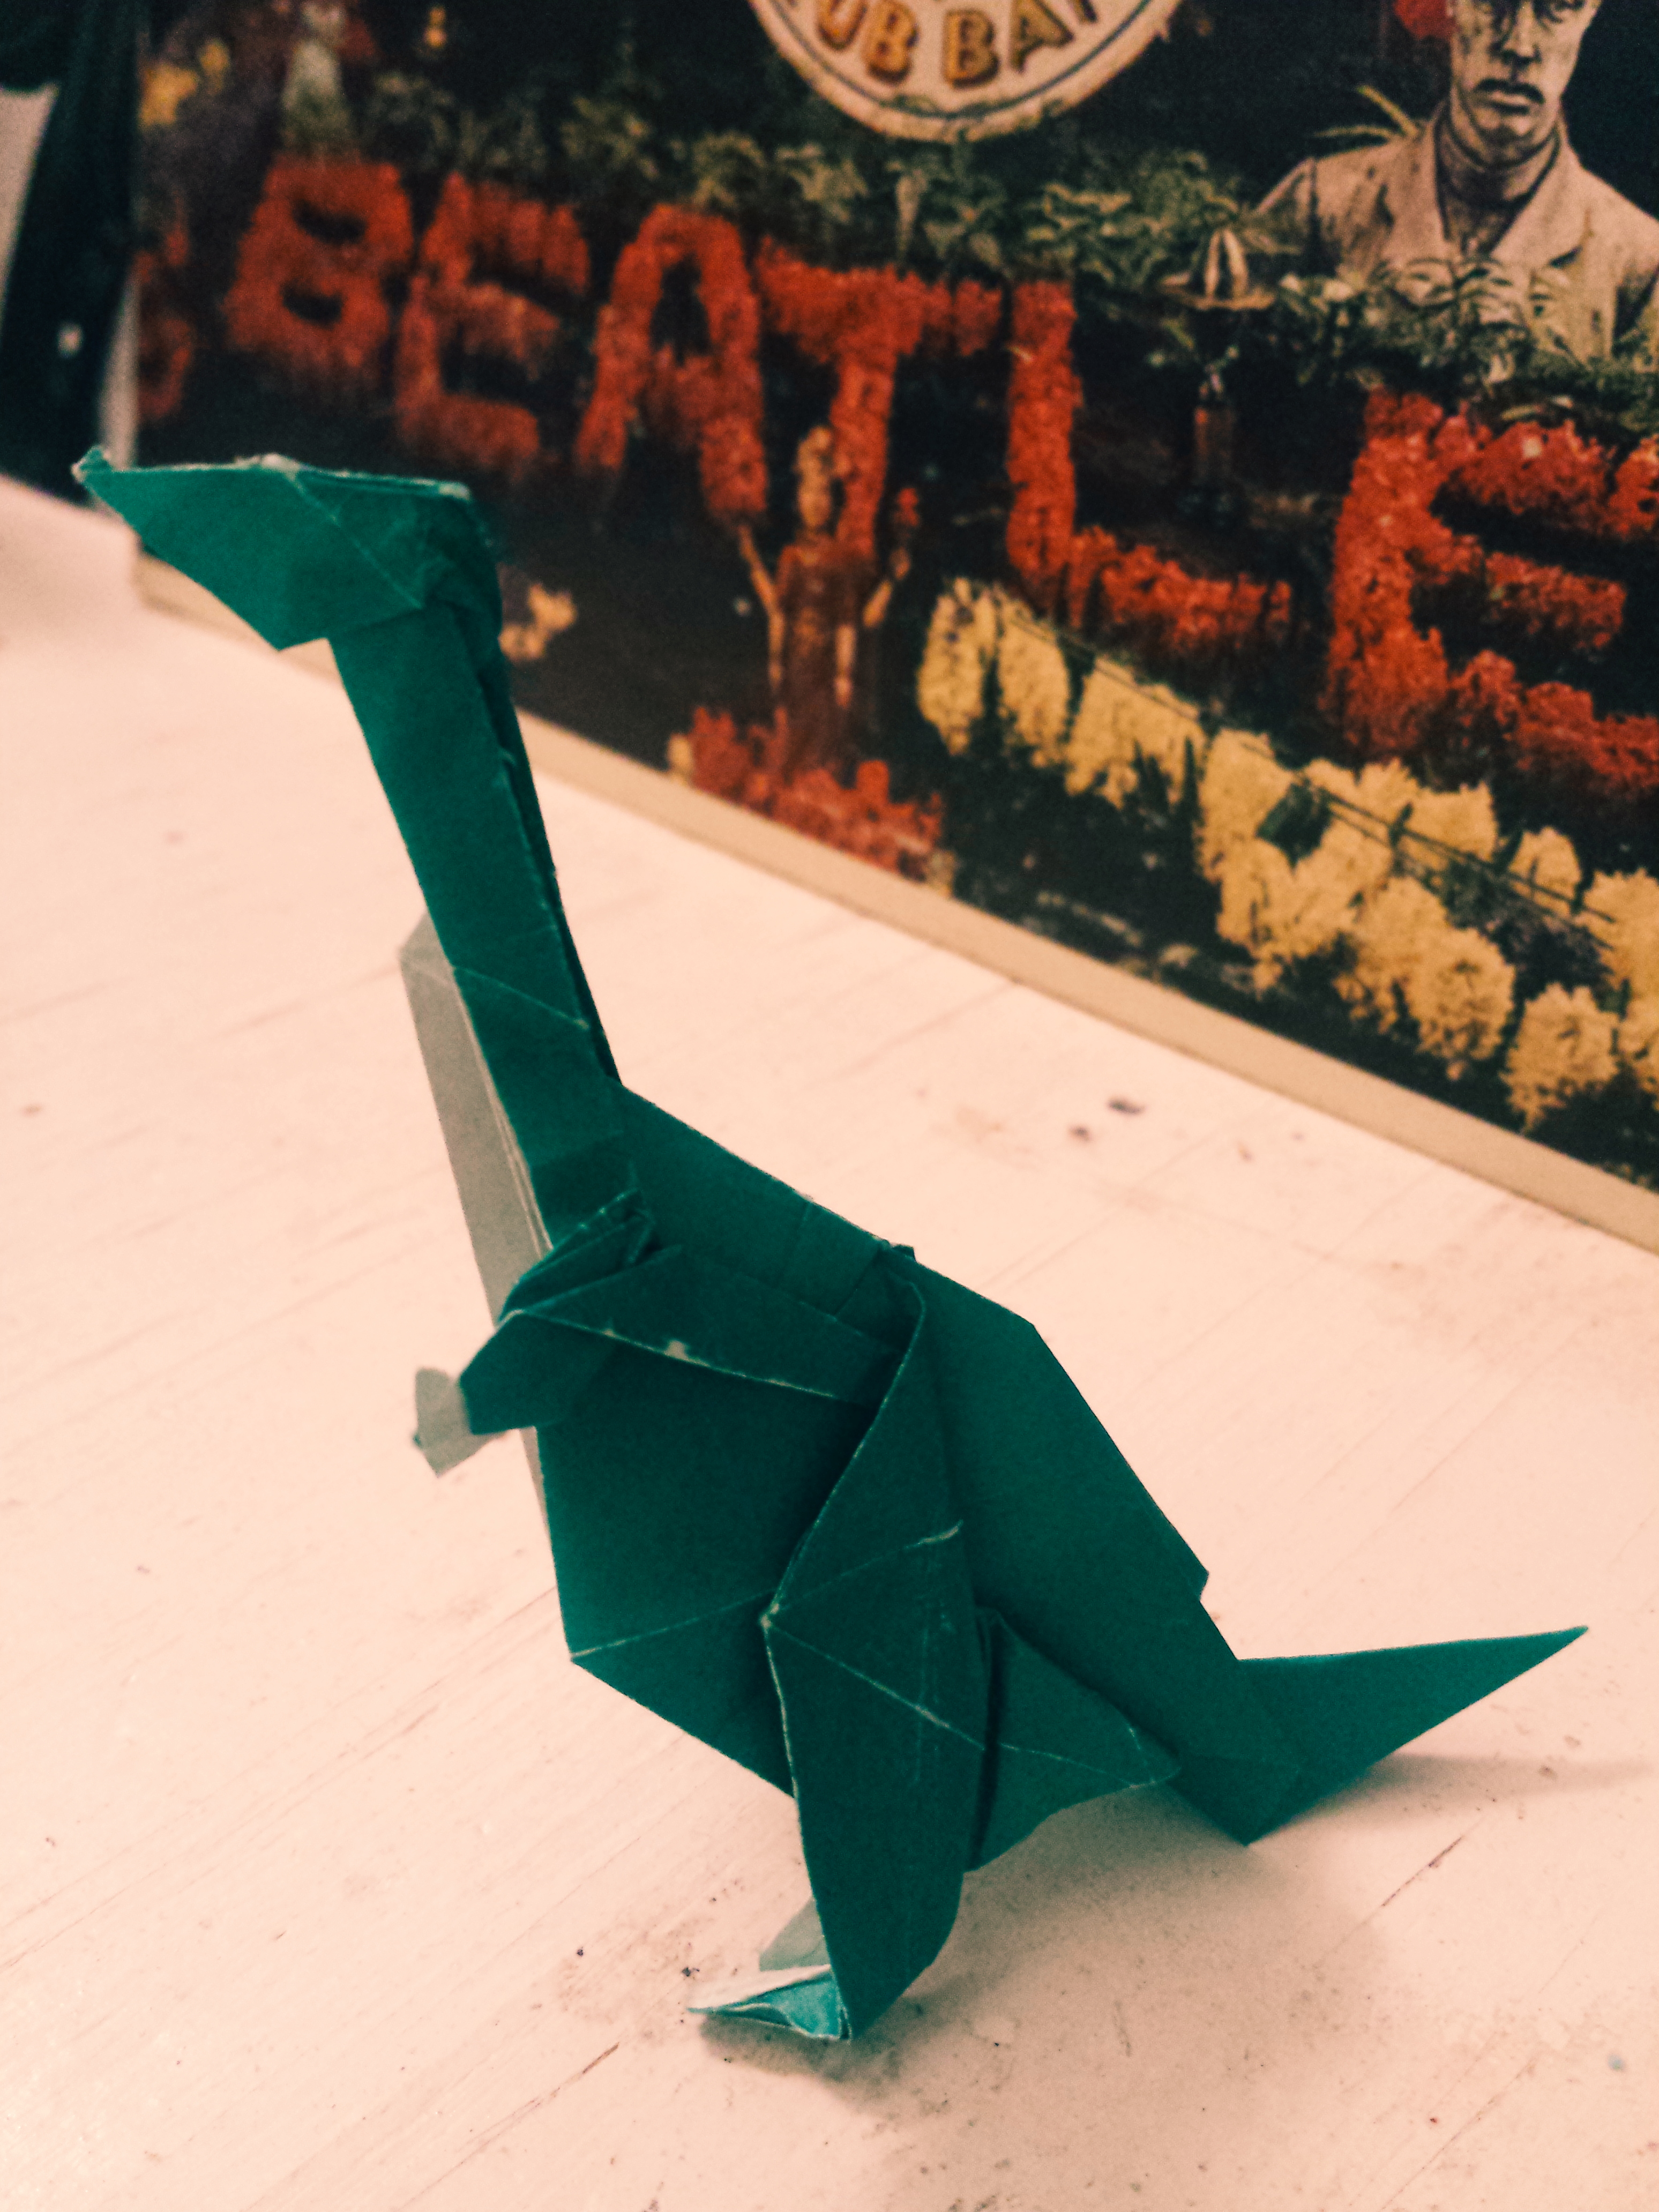 A close-up of my dinosaur model.